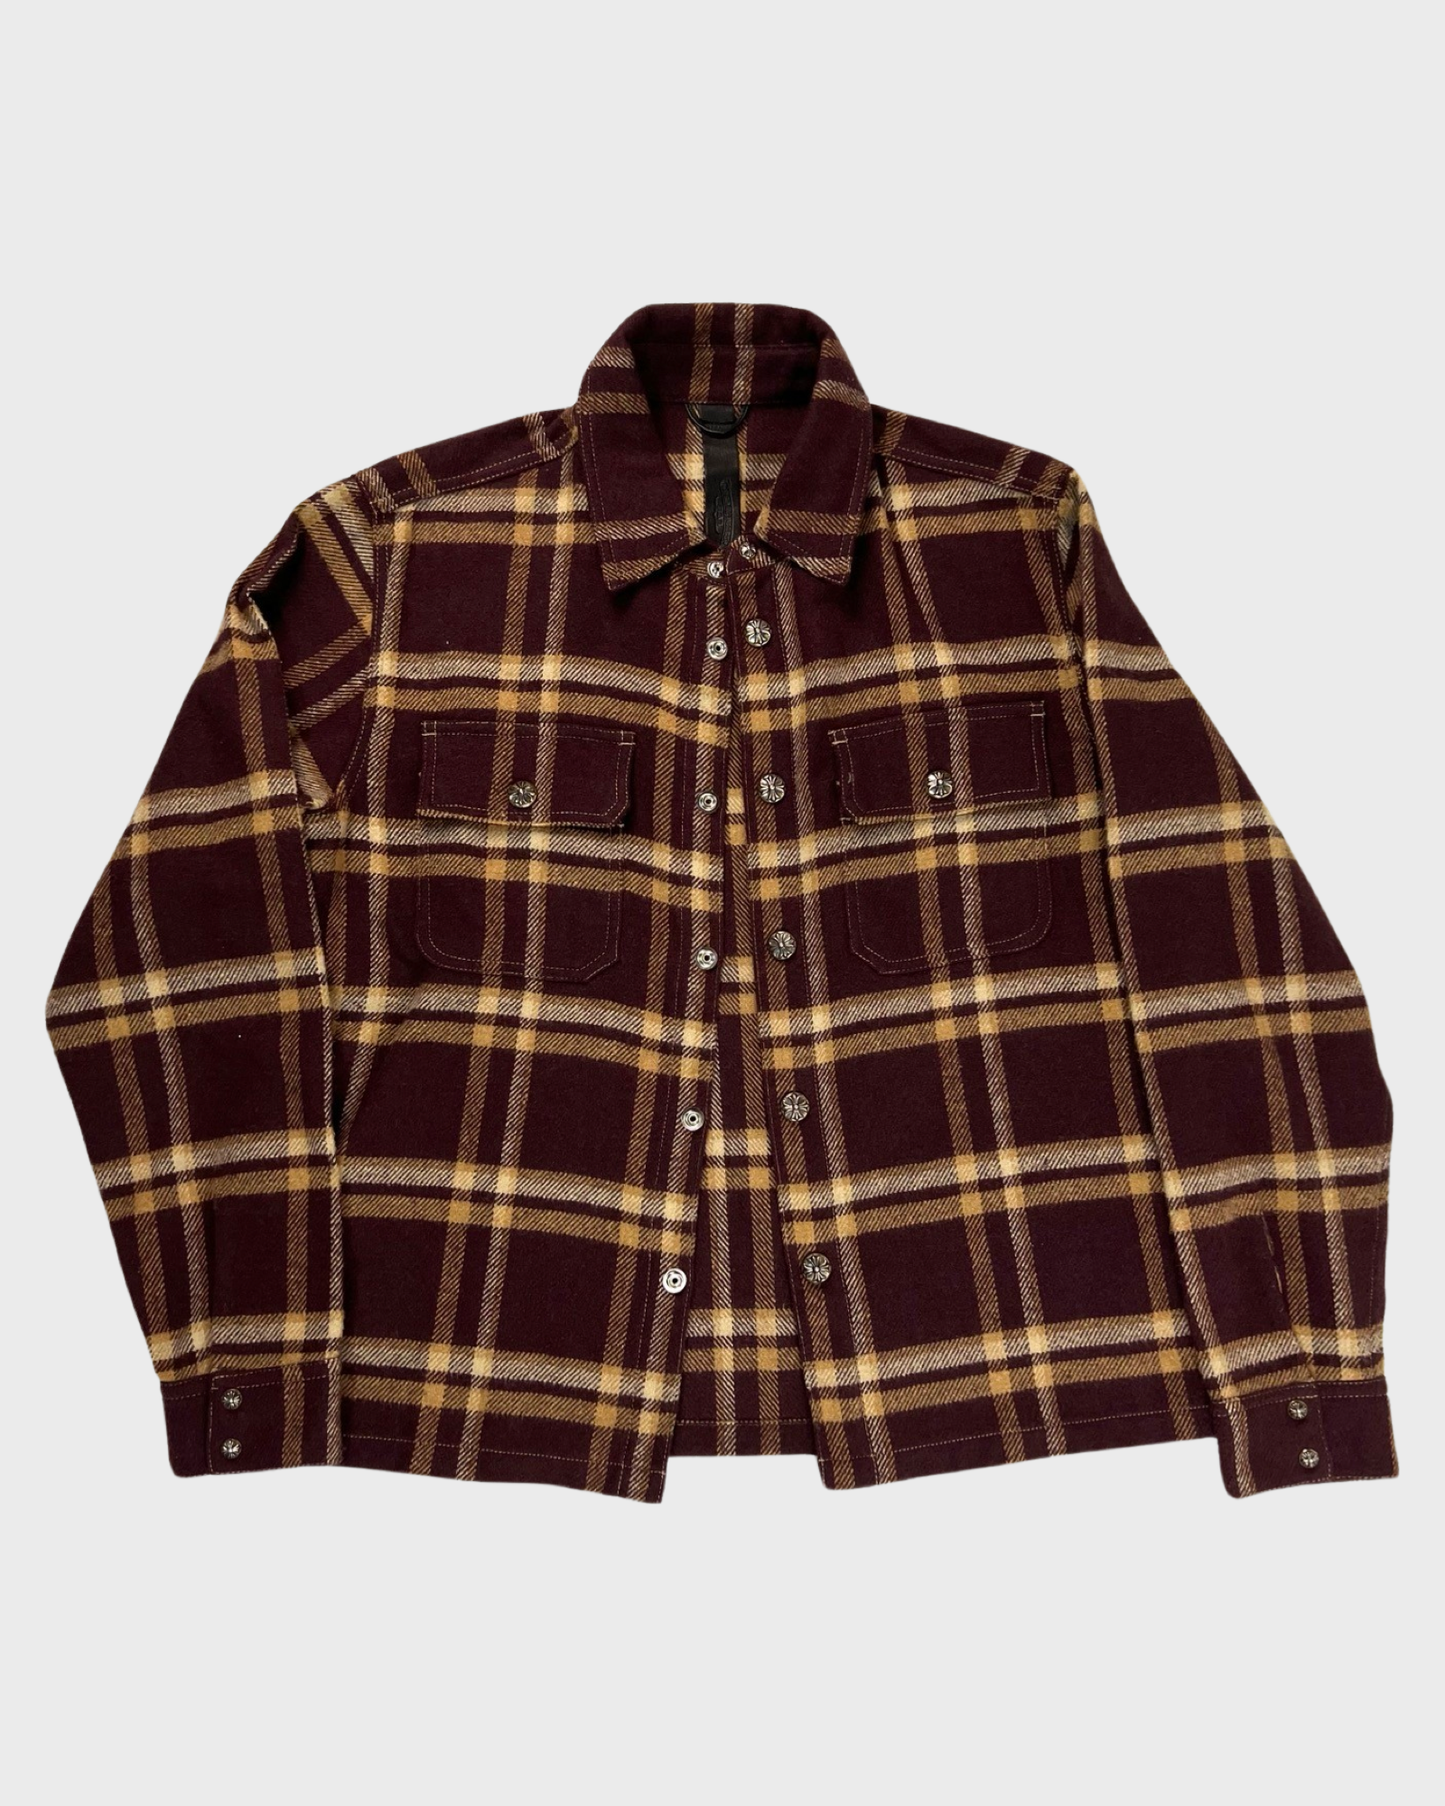 Chrome Hearts button up plaid Flannel shirt maroon SZ:M